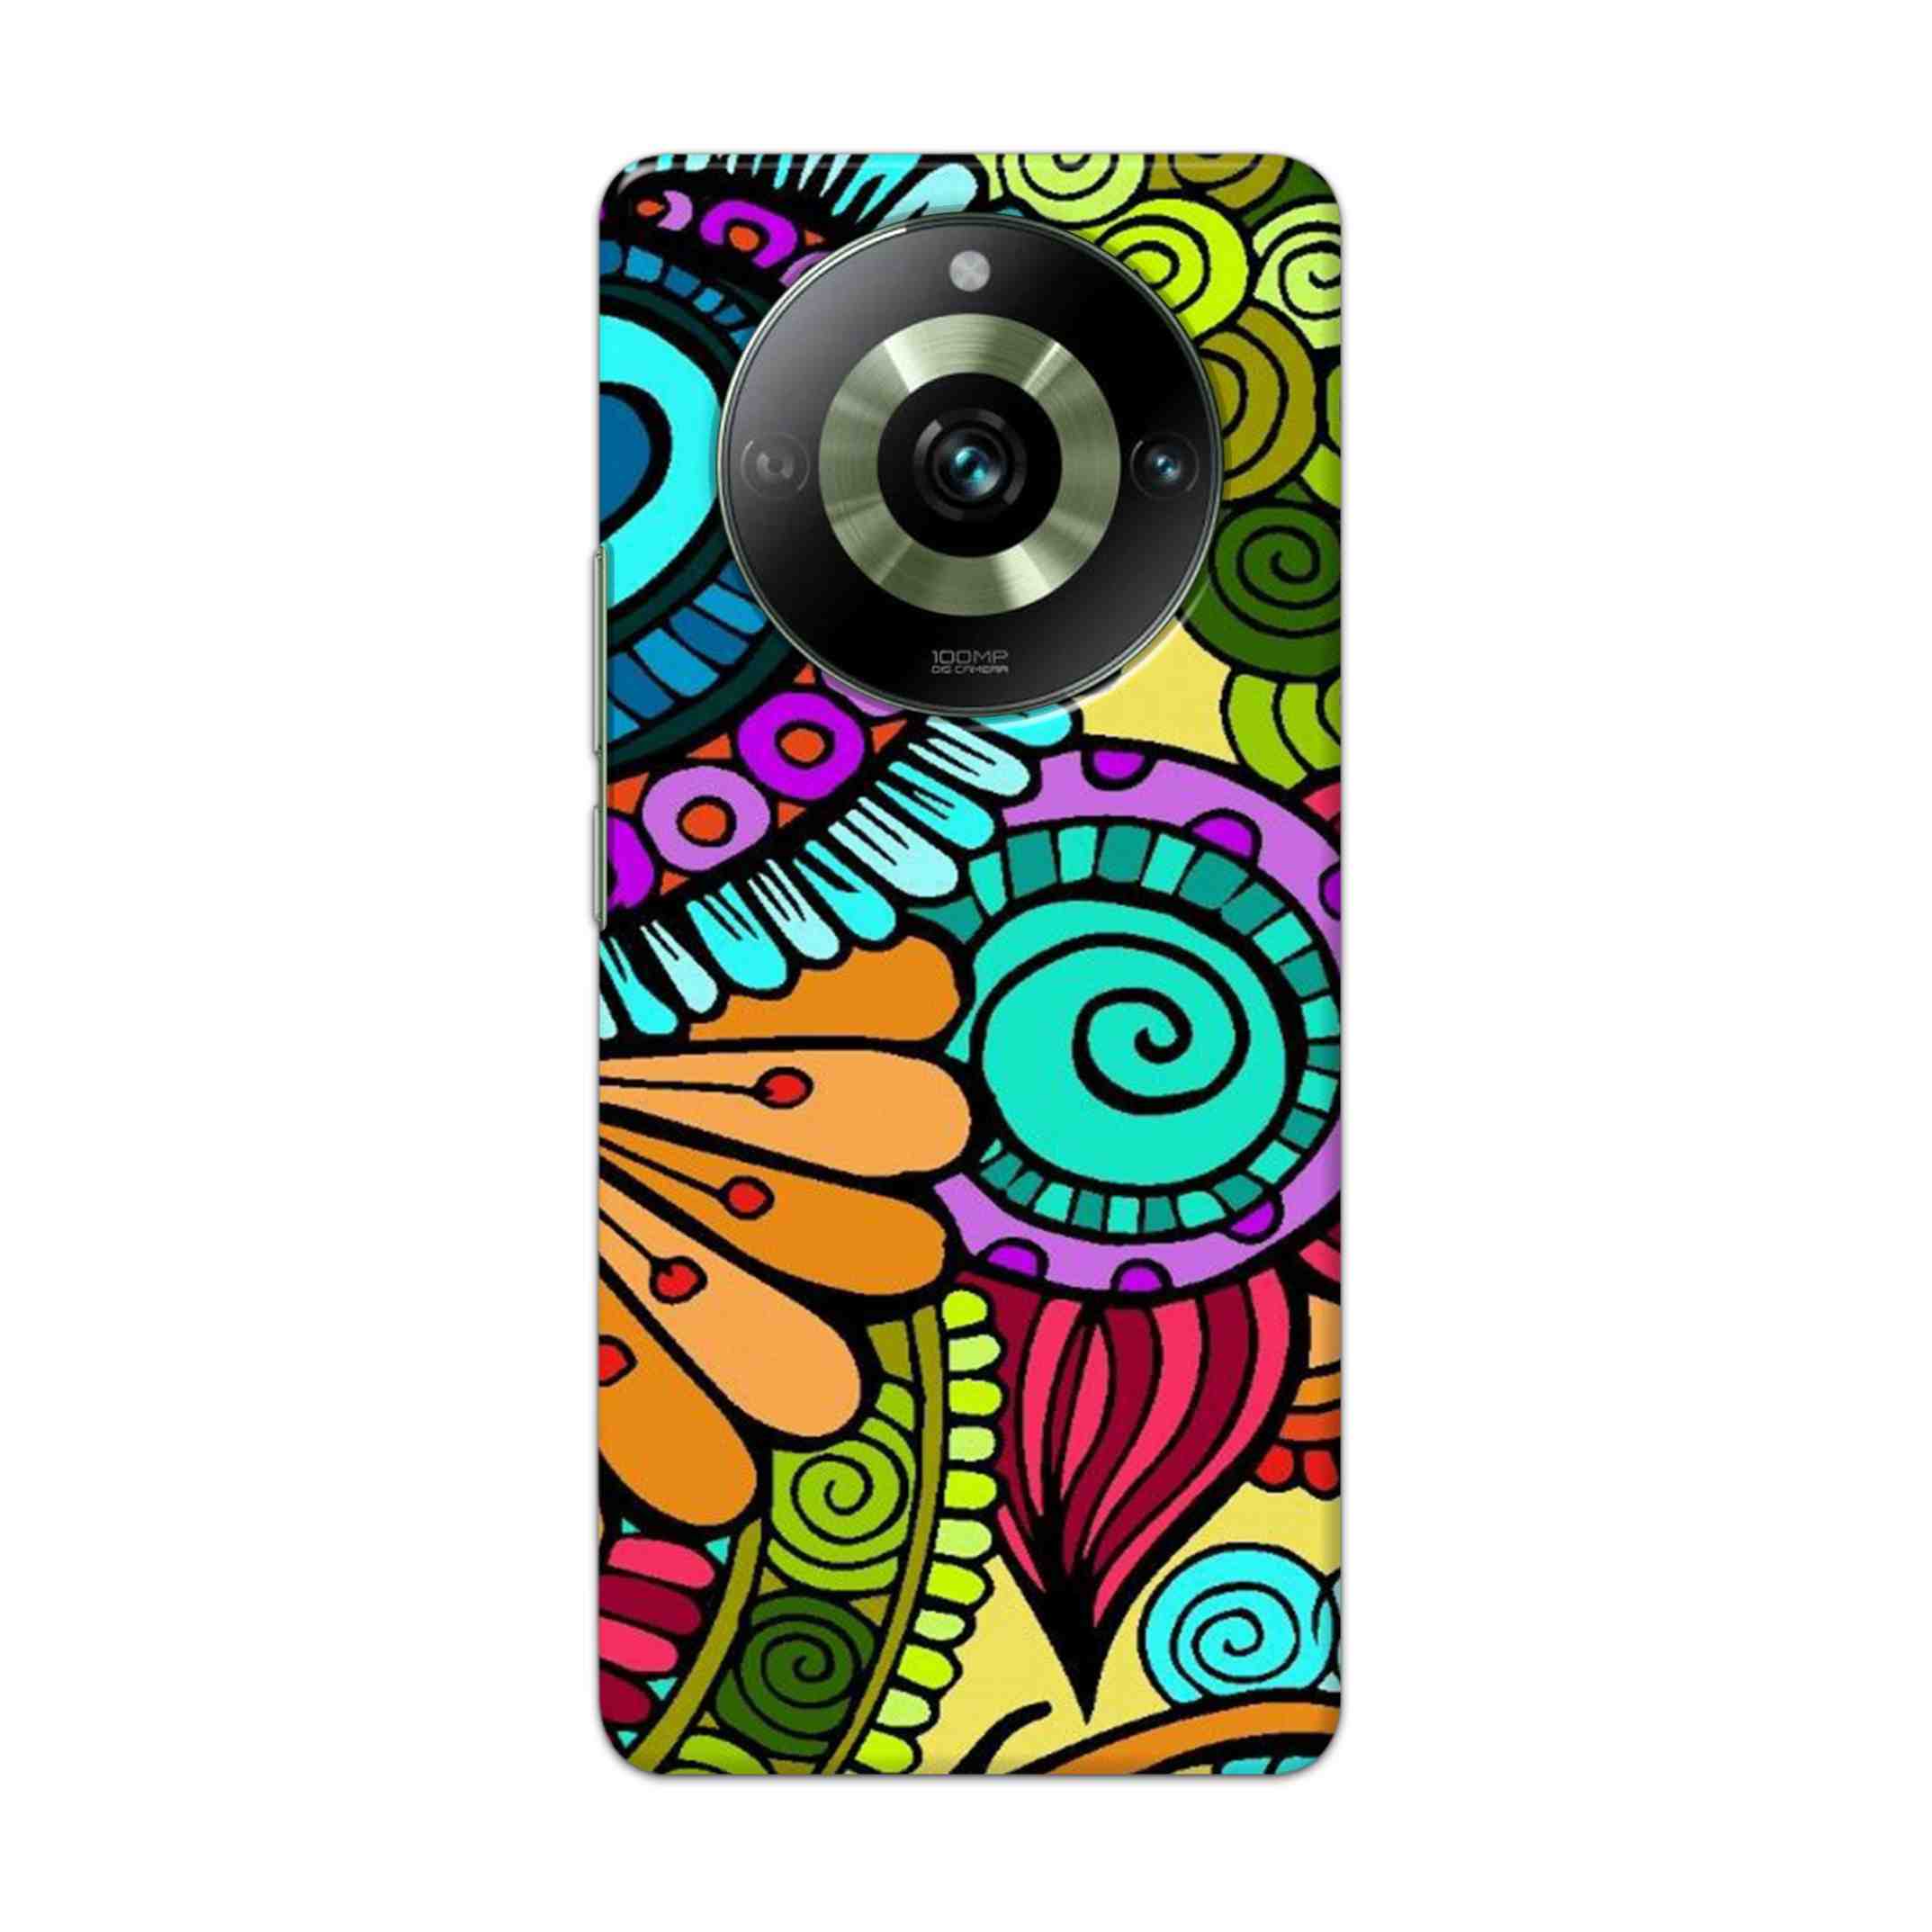 Buy The Kalachakra Mandala Hard Back Mobile Phone Case Cover For Realme11 pro5g Online